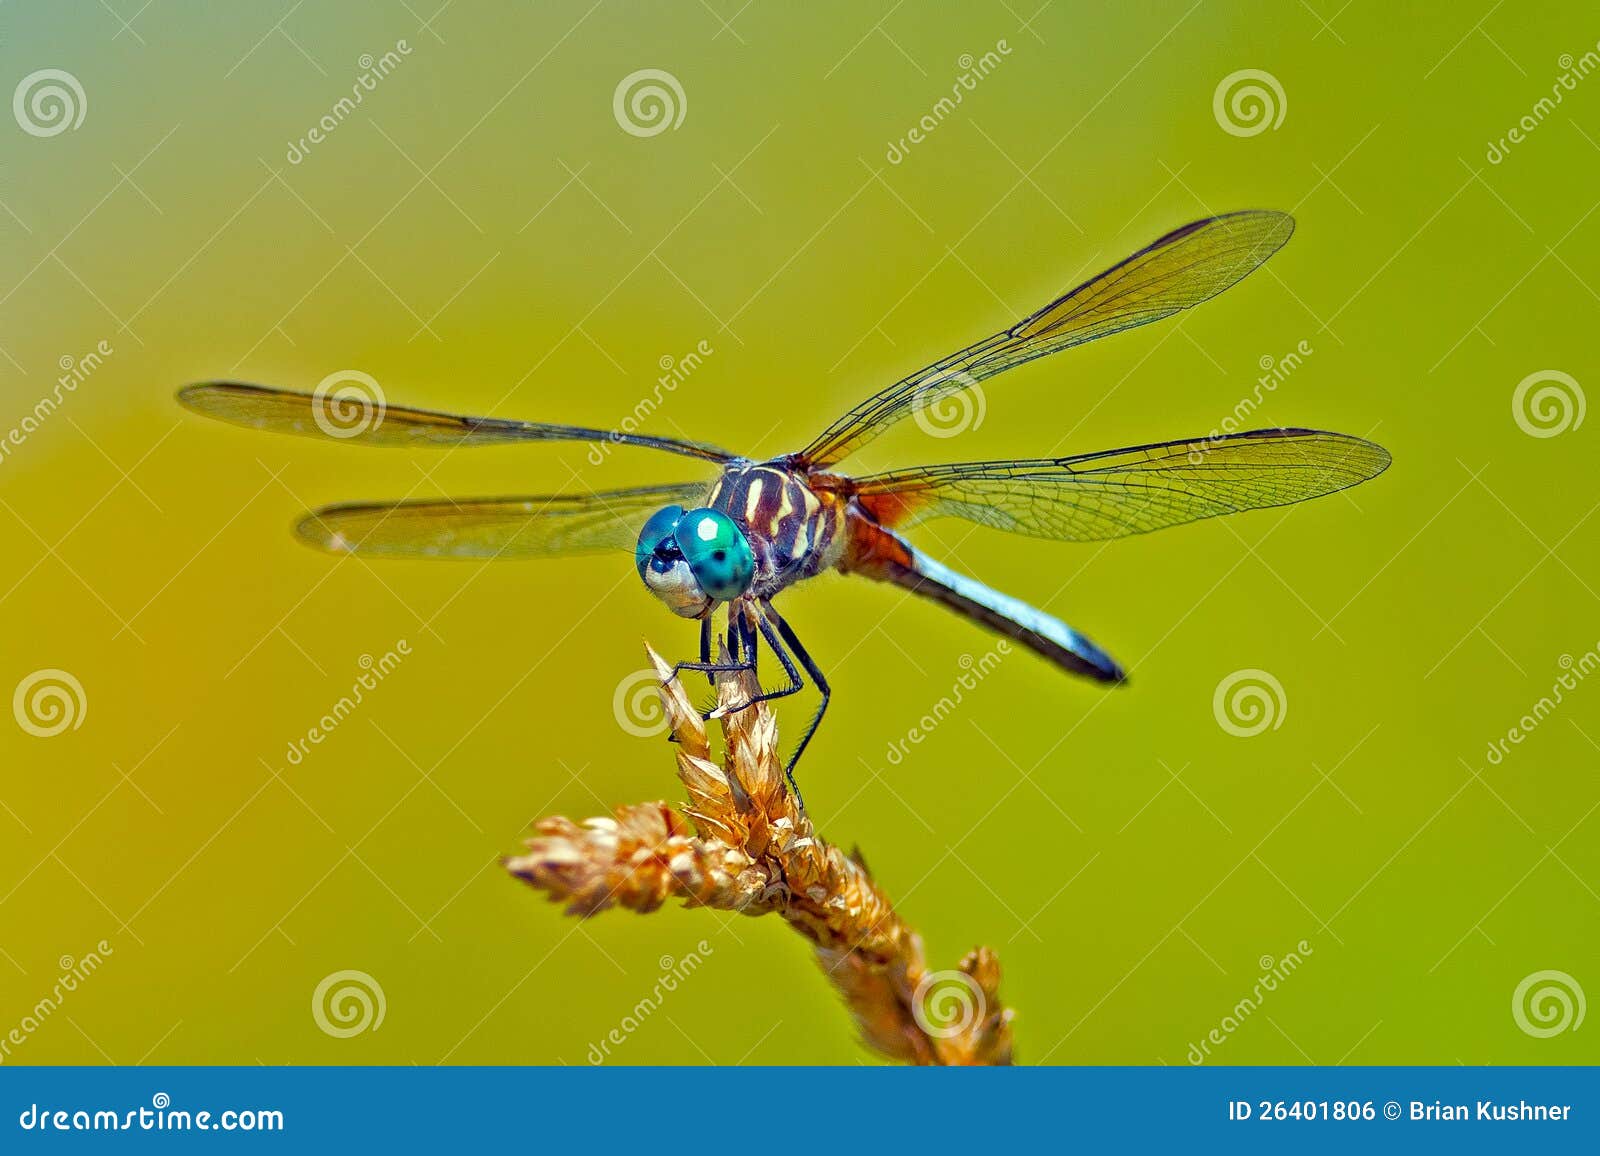 dragonfly blue dasher